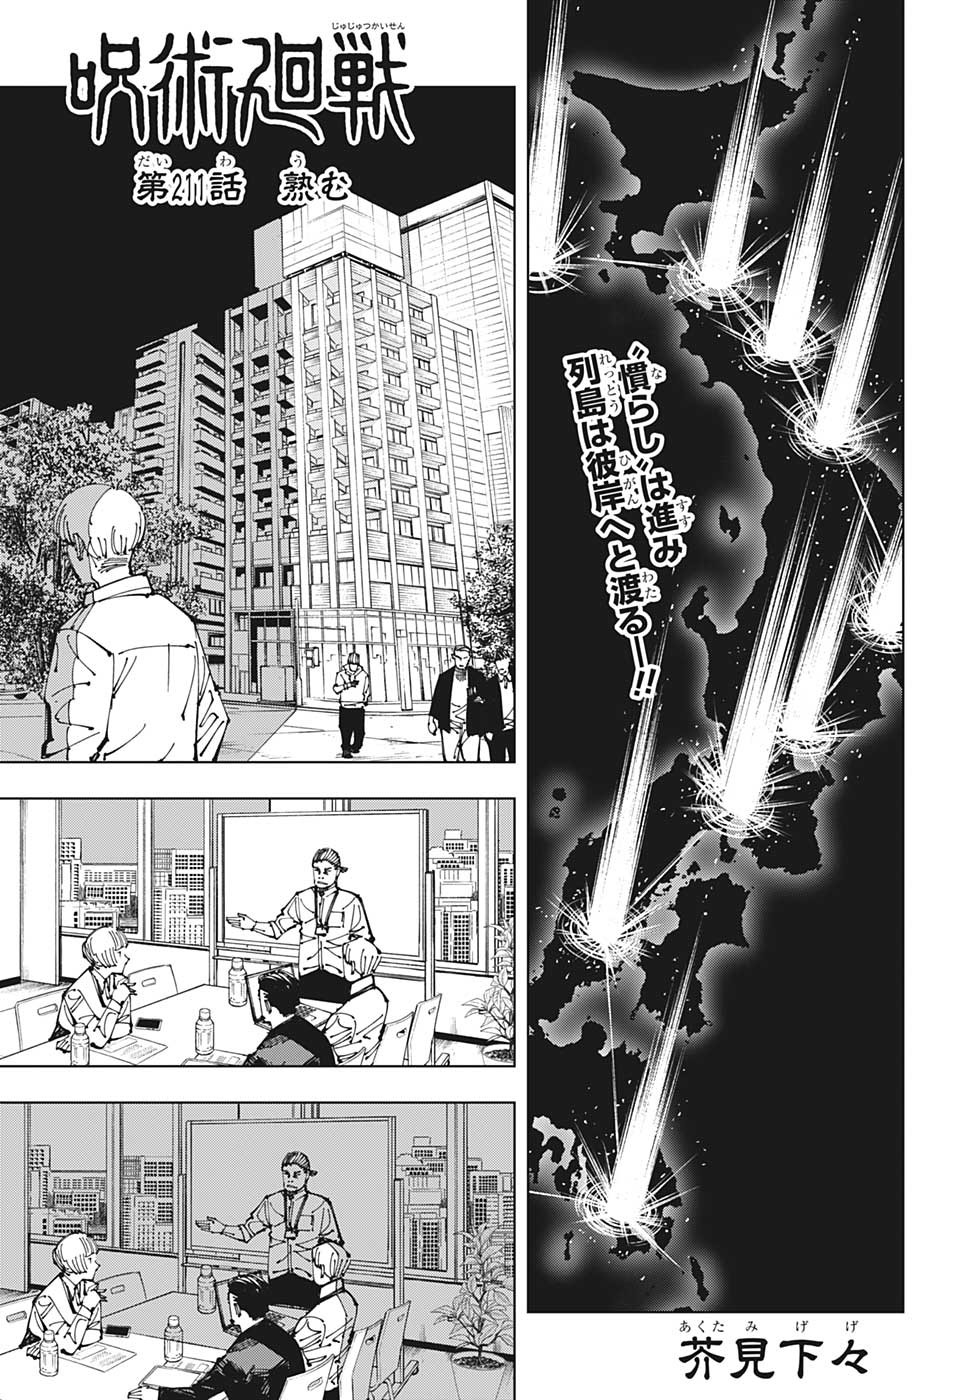 Jujutsu Kaisen, Chapter 217 - Jujutsu Kaisen Manga Online